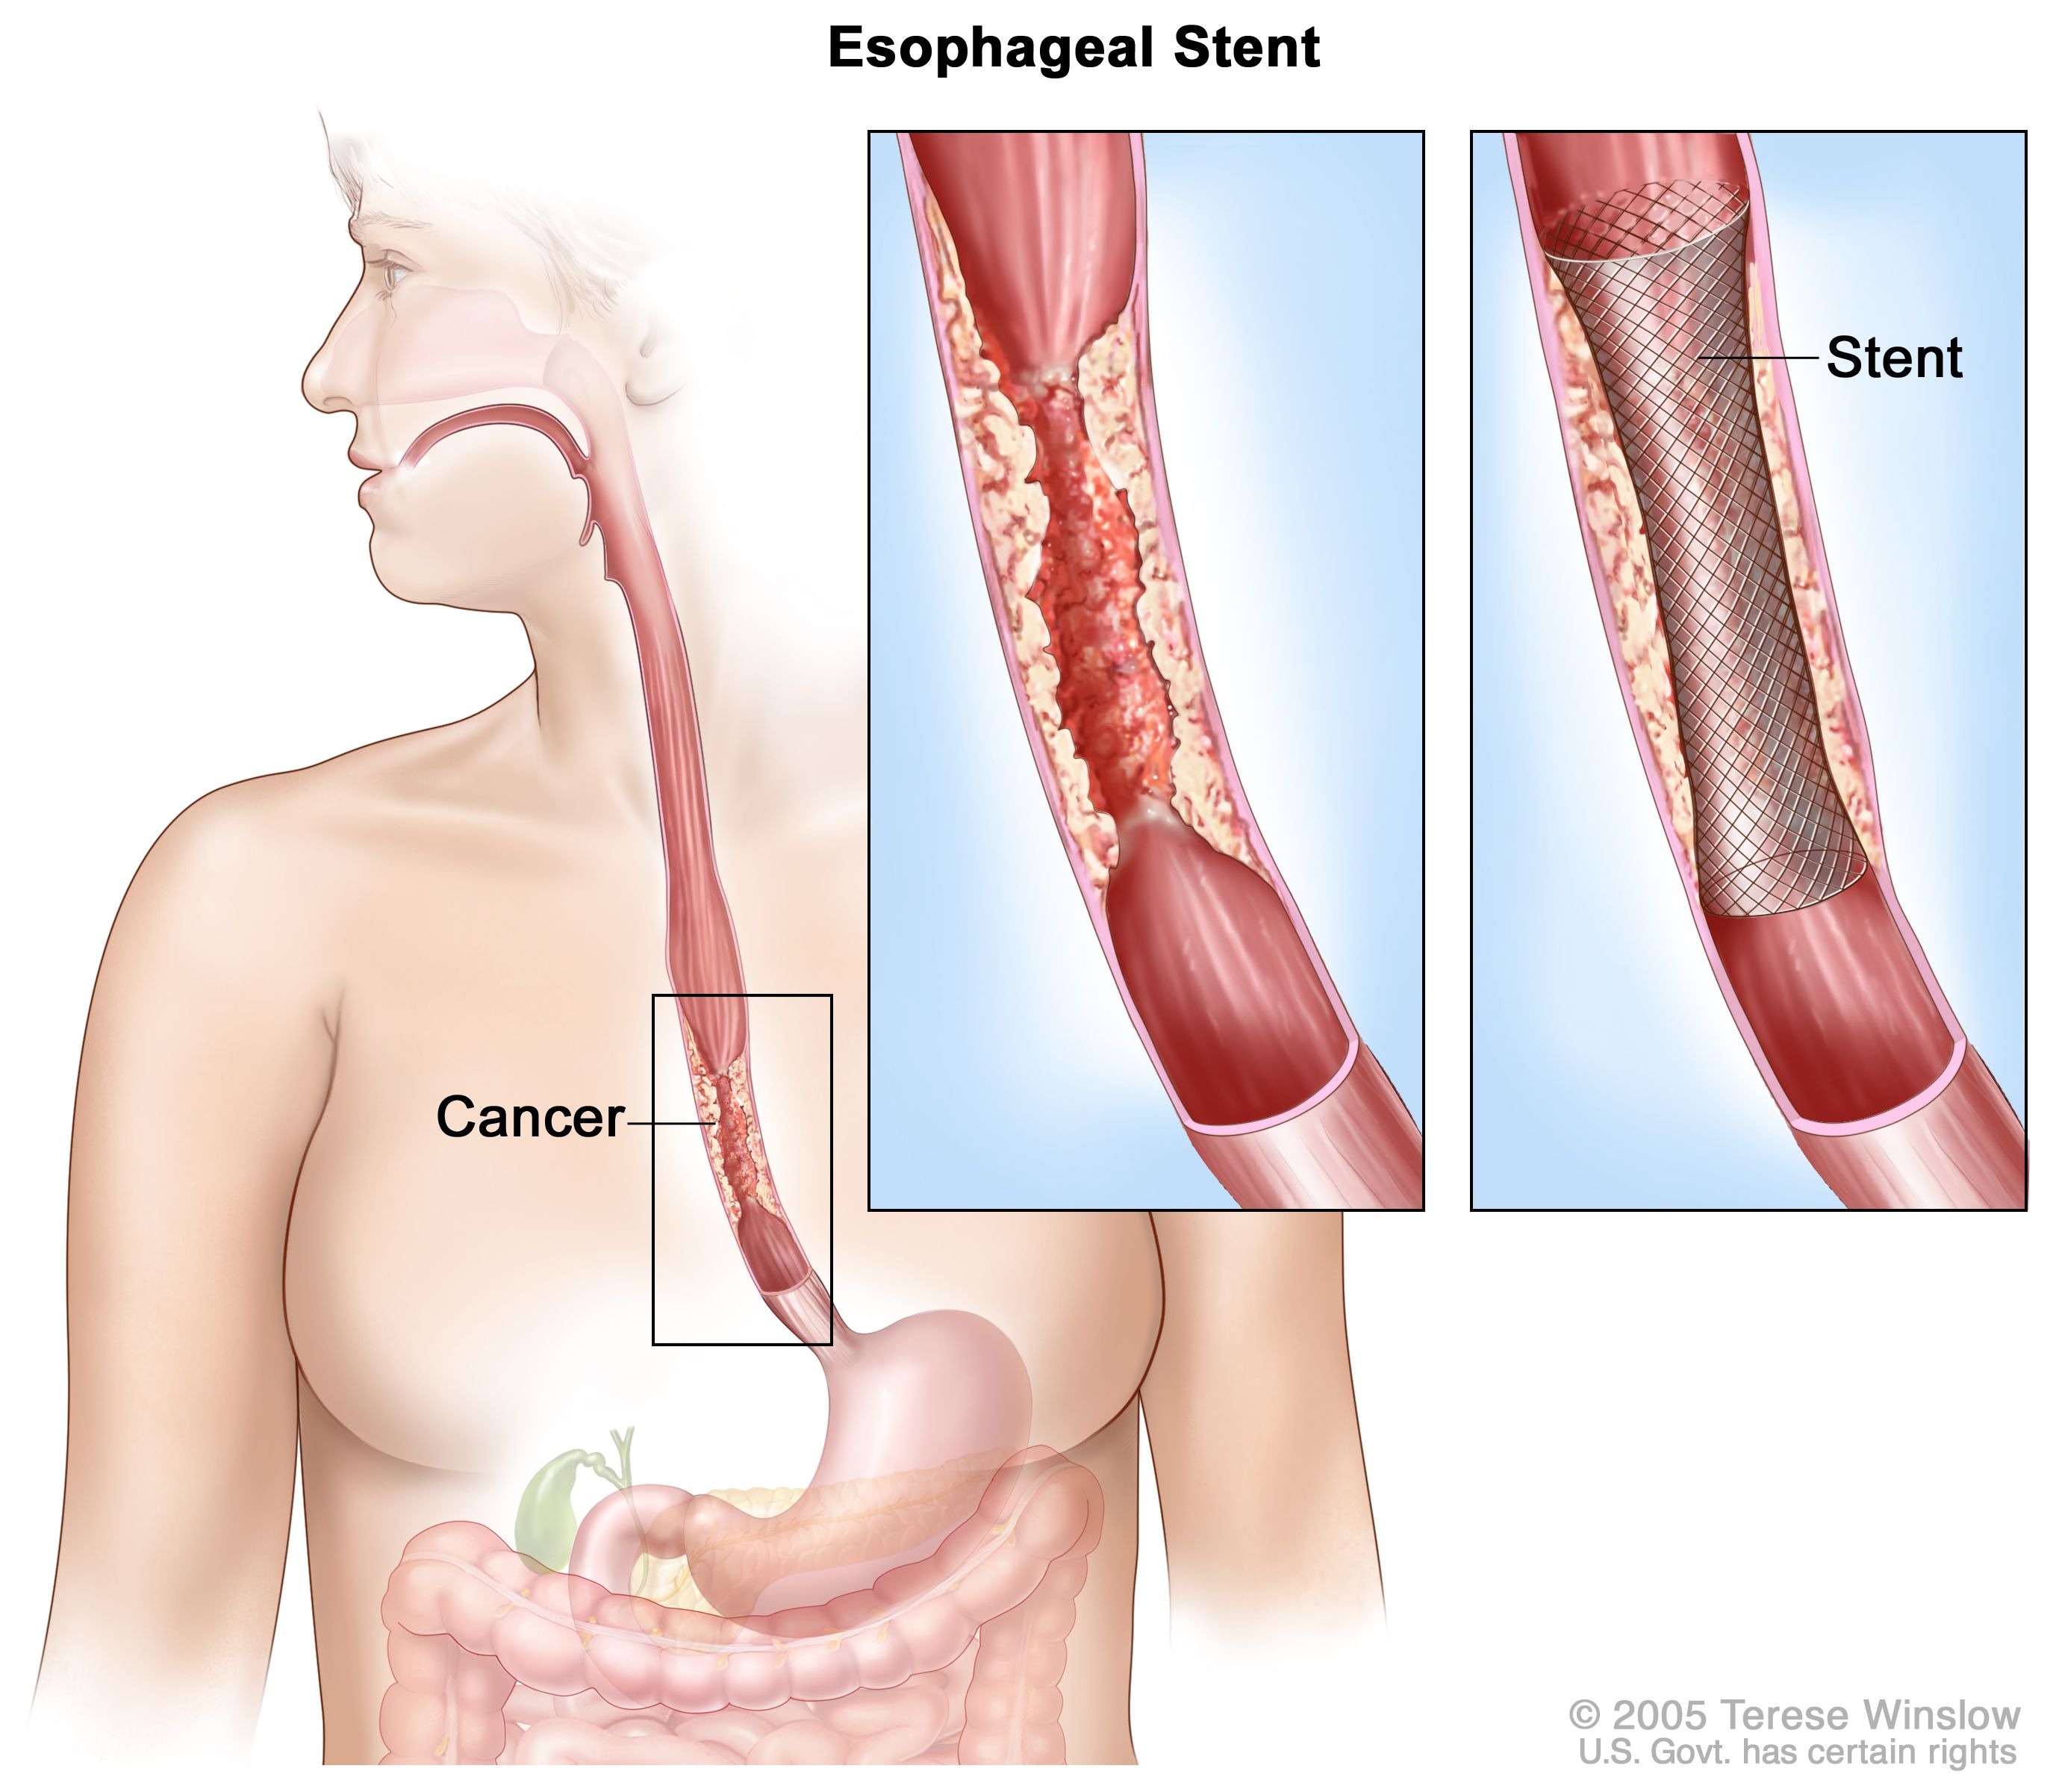 esophageal carcinoma